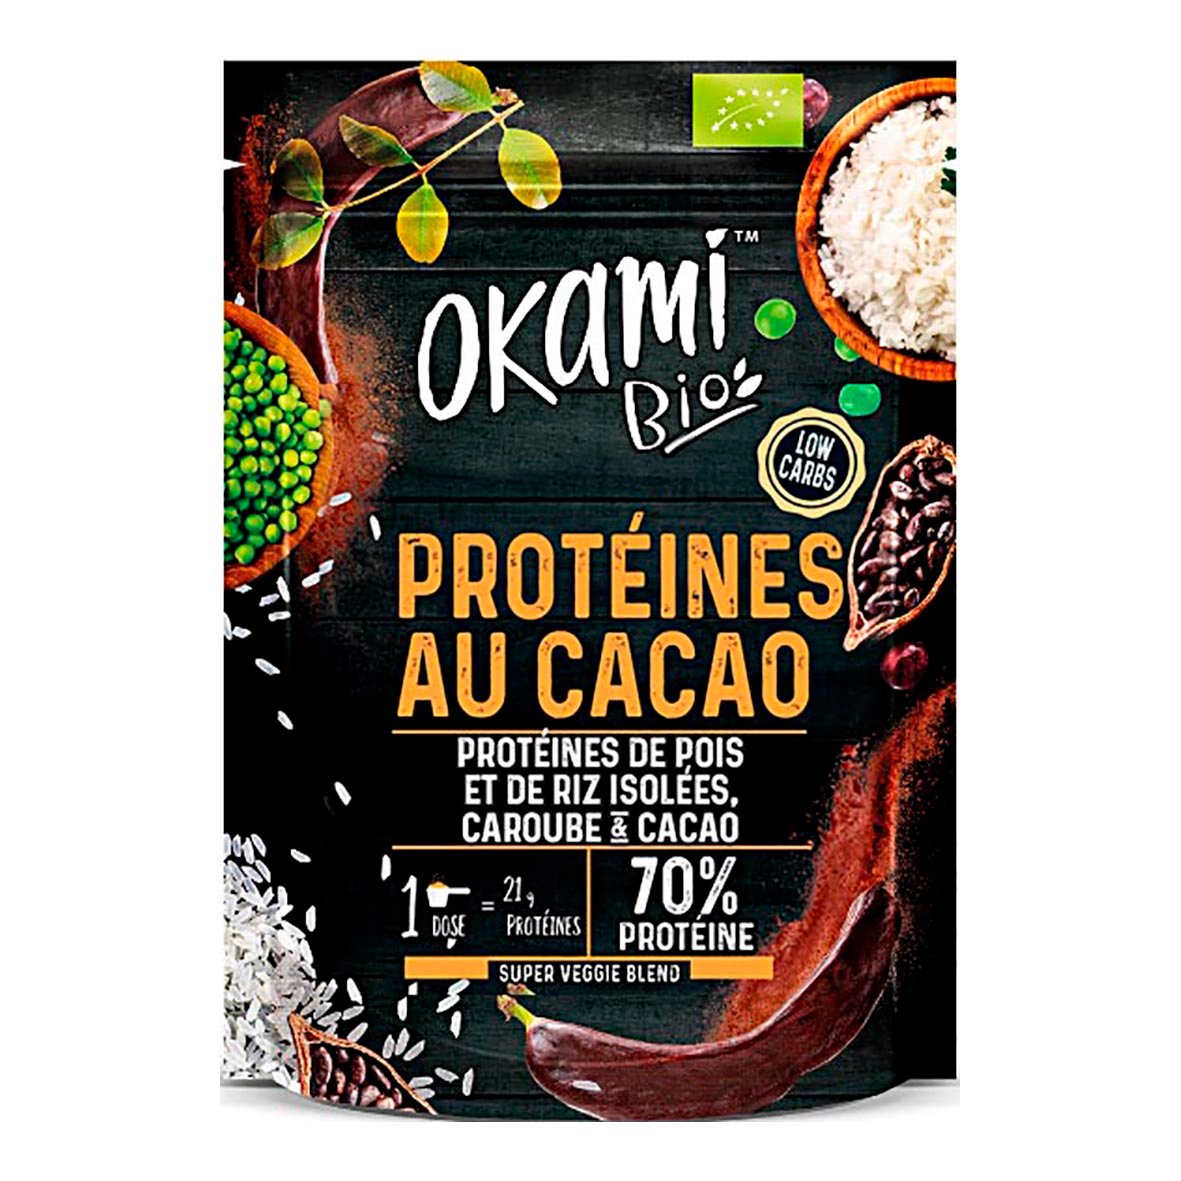 Okami protéines de pois cacao